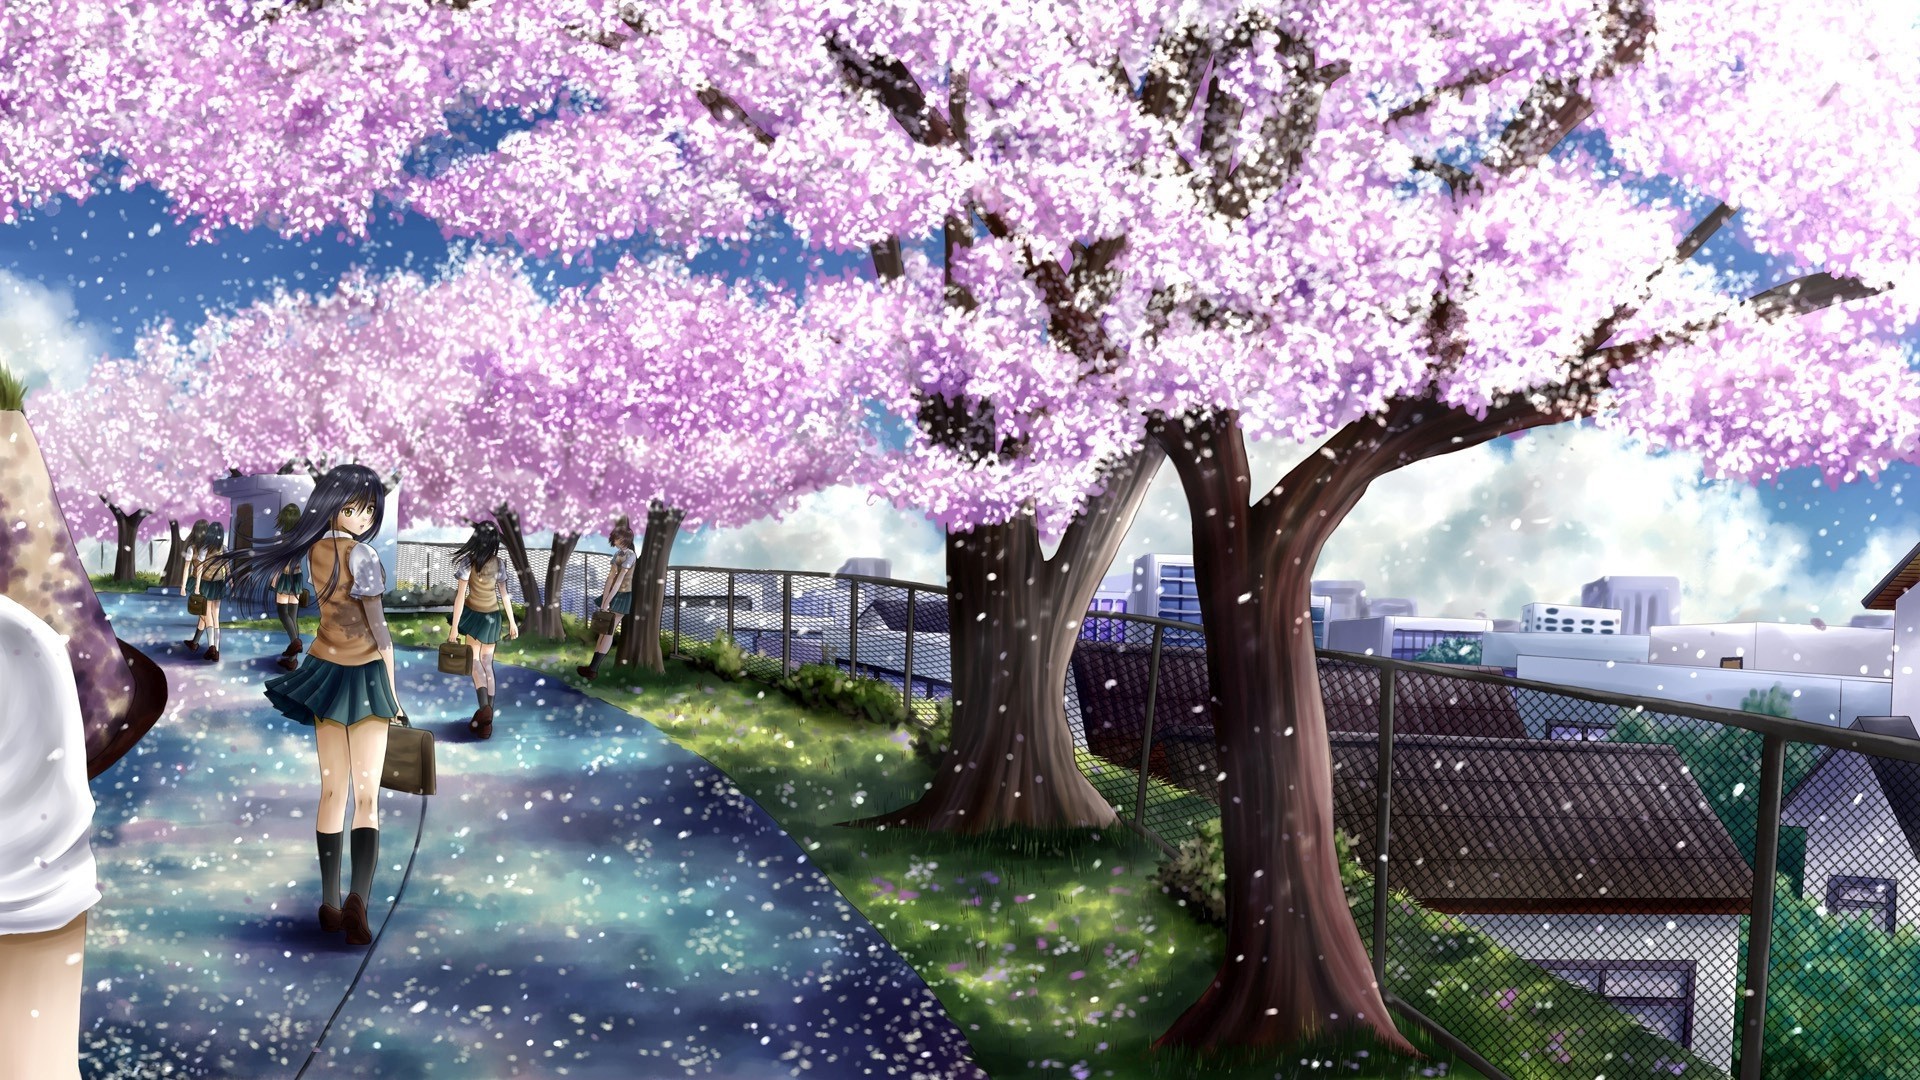 1920x1080 Anime Cherry Blossom Full HD Wallpaper.